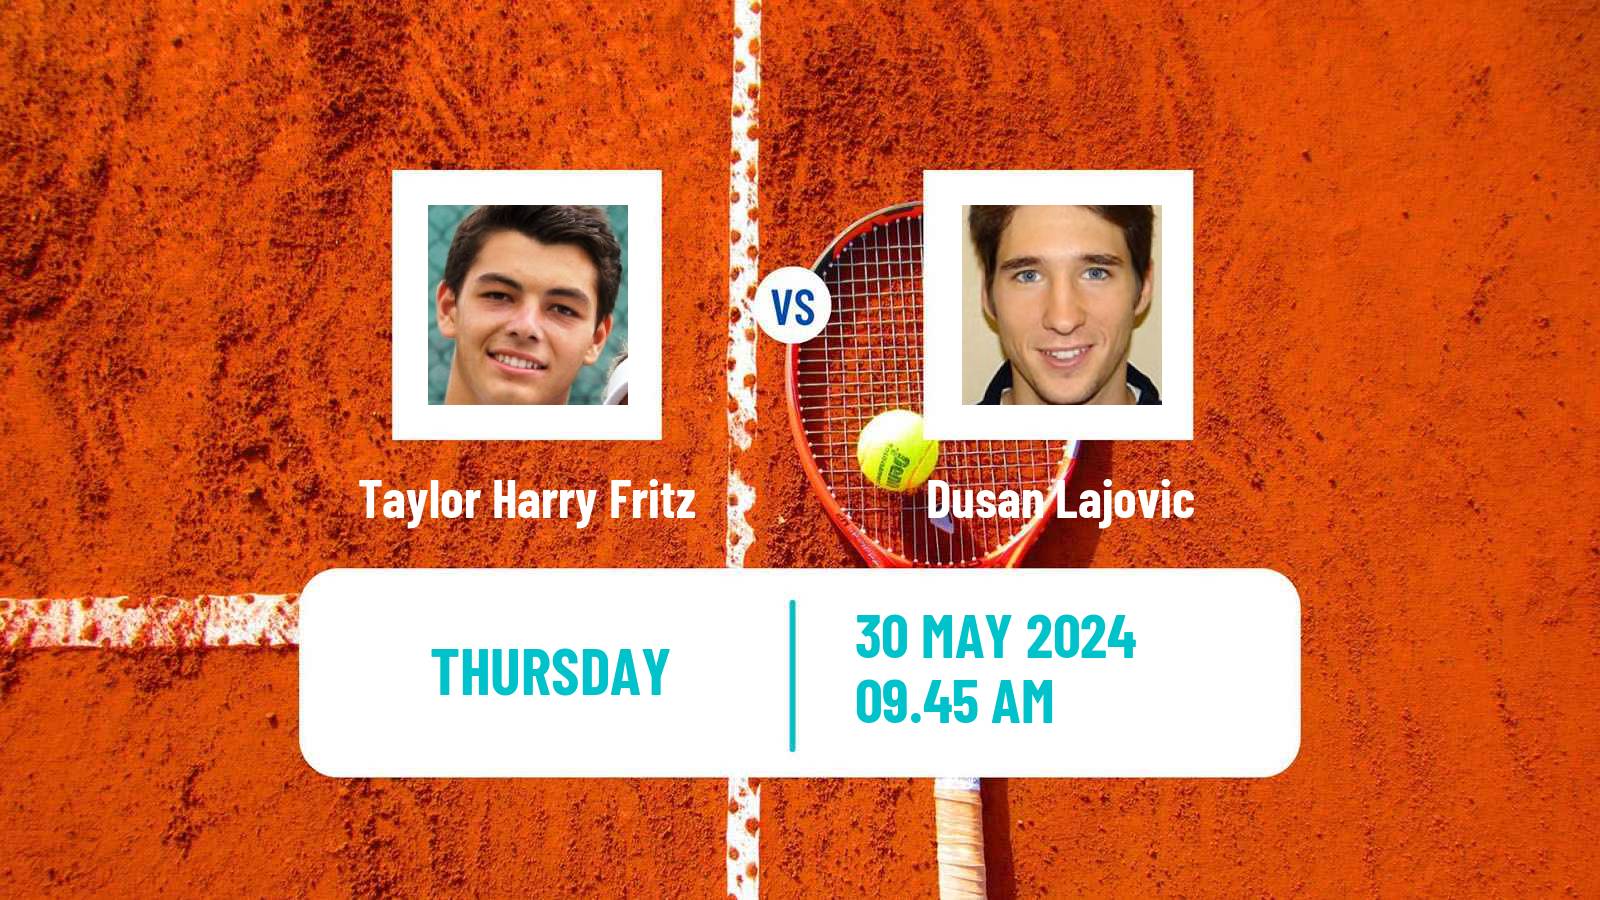 Tennis ATP Roland Garros Taylor Harry Fritz - Dusan Lajovic